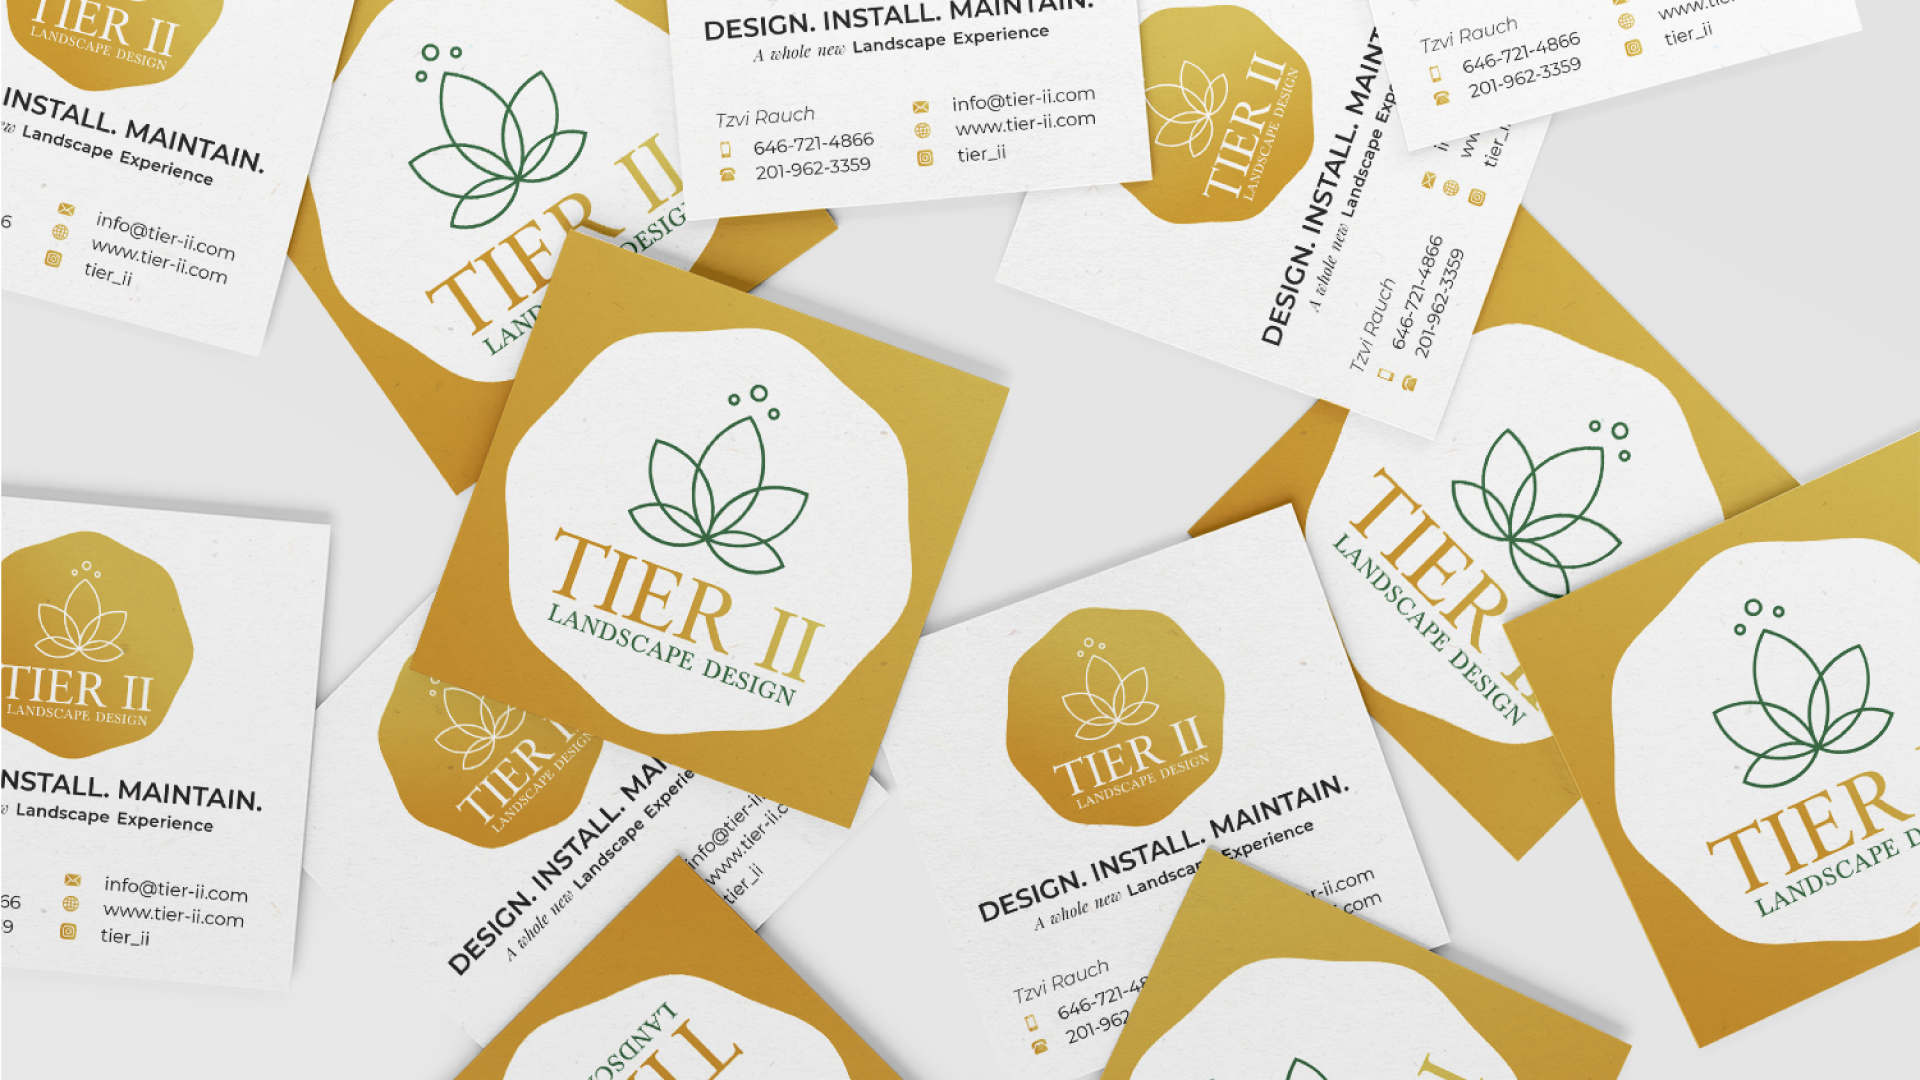 Premium business cards design and print, Tier-II landscape design